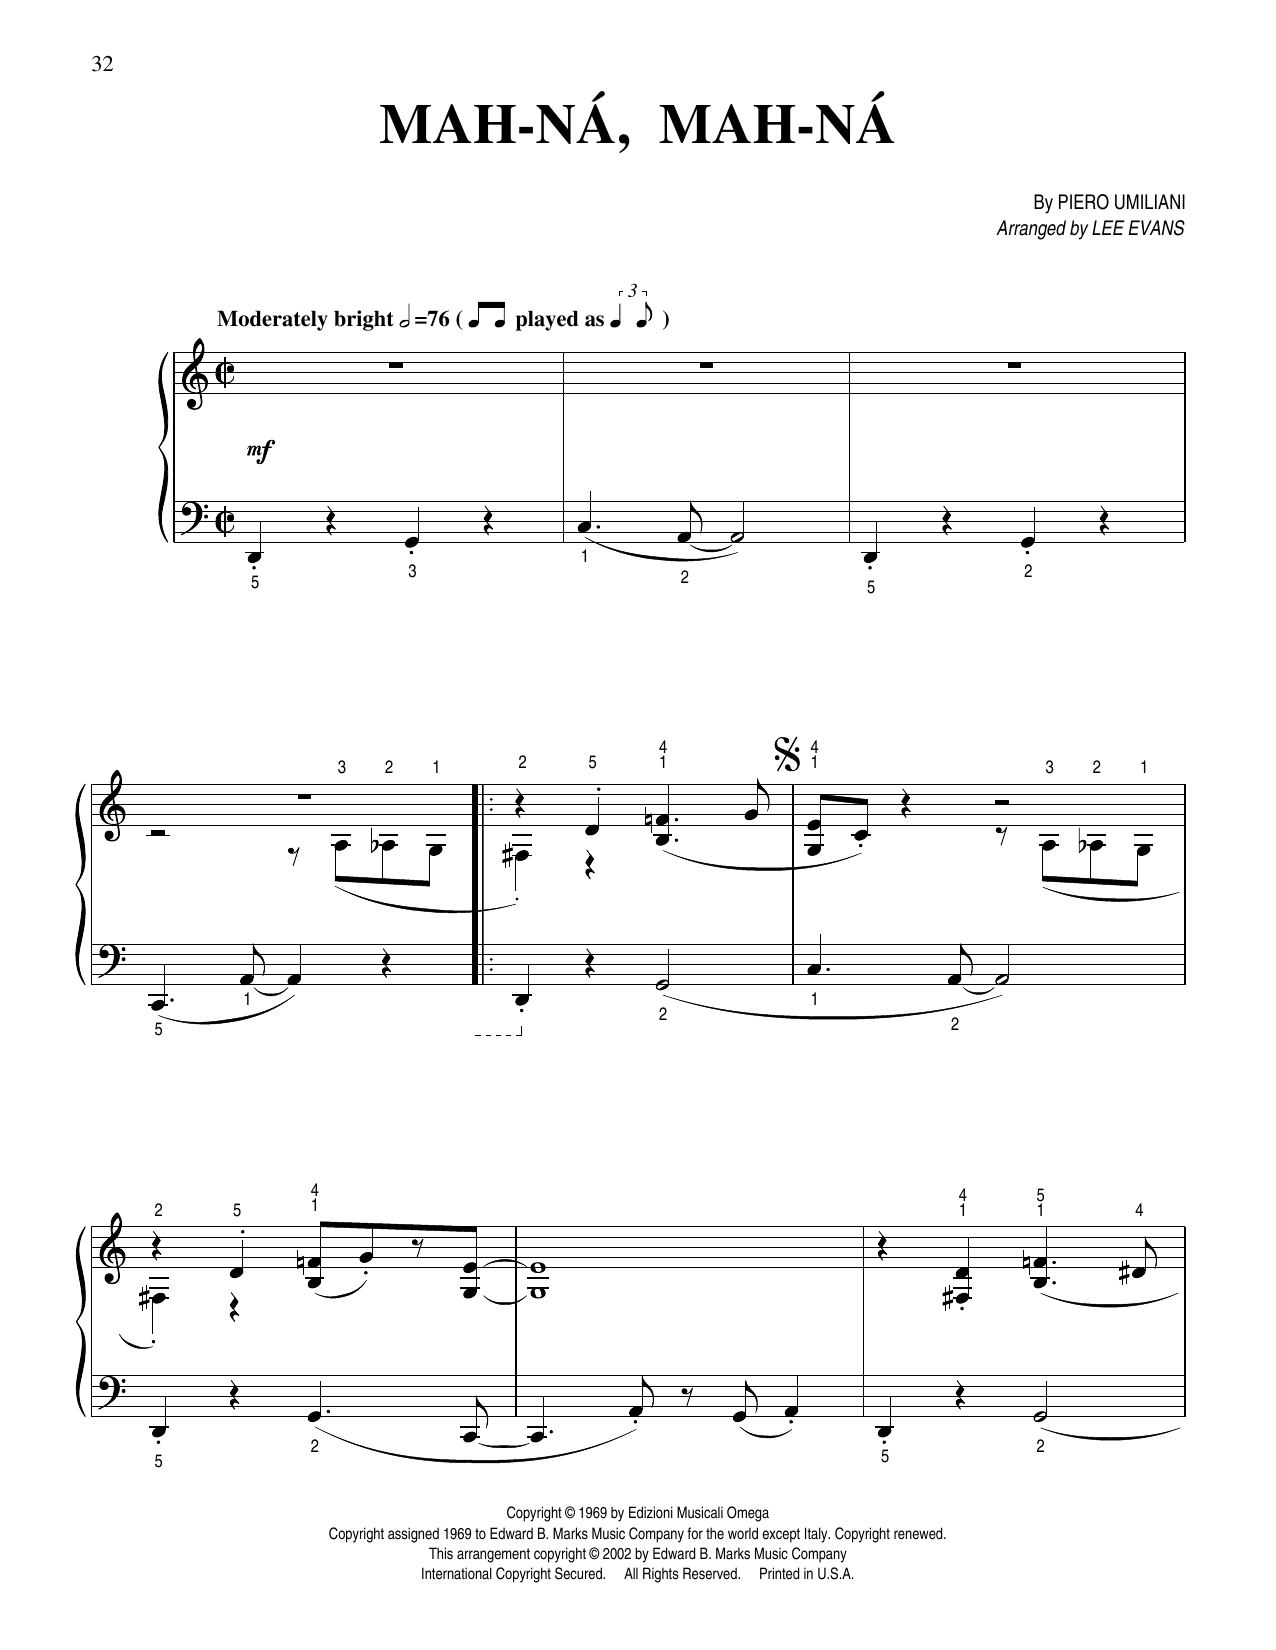 Piero Umiliani Mah-Na Mah-Na (arr. Lee Evans) Sheet Music Notes & Chords for Piano Solo - Download or Print PDF